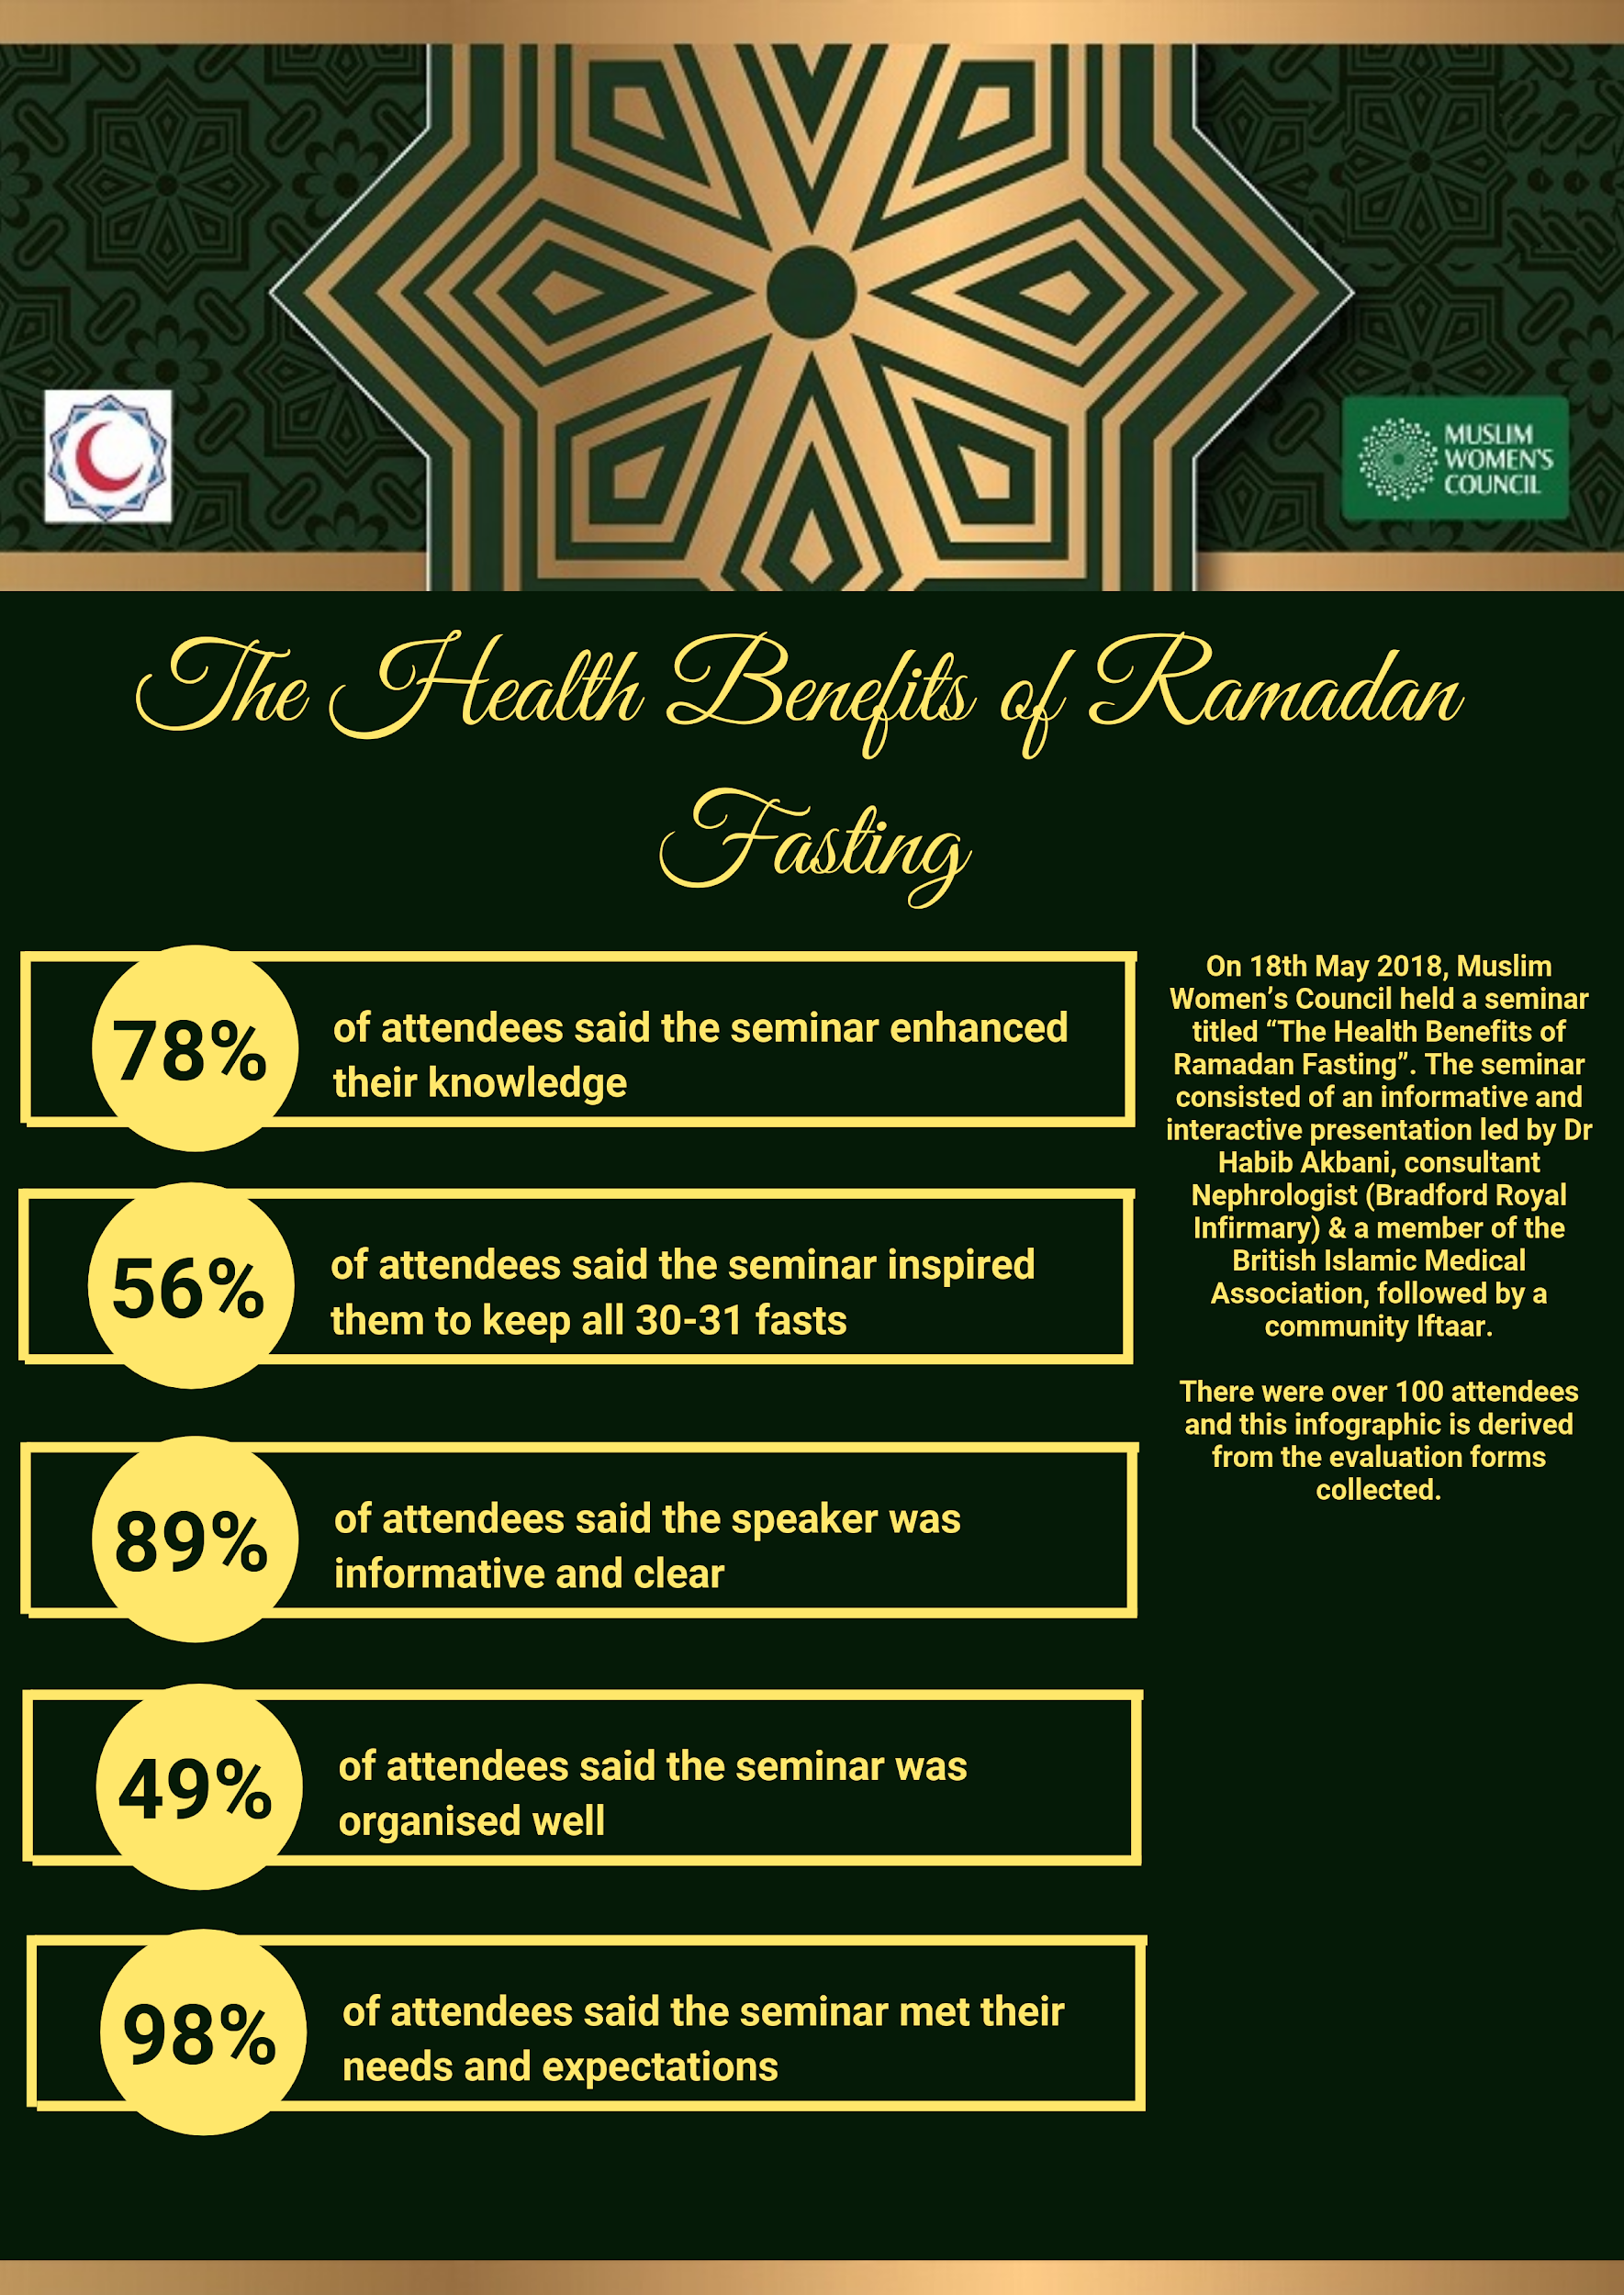 The Health Benefits of Ramadan Fasting